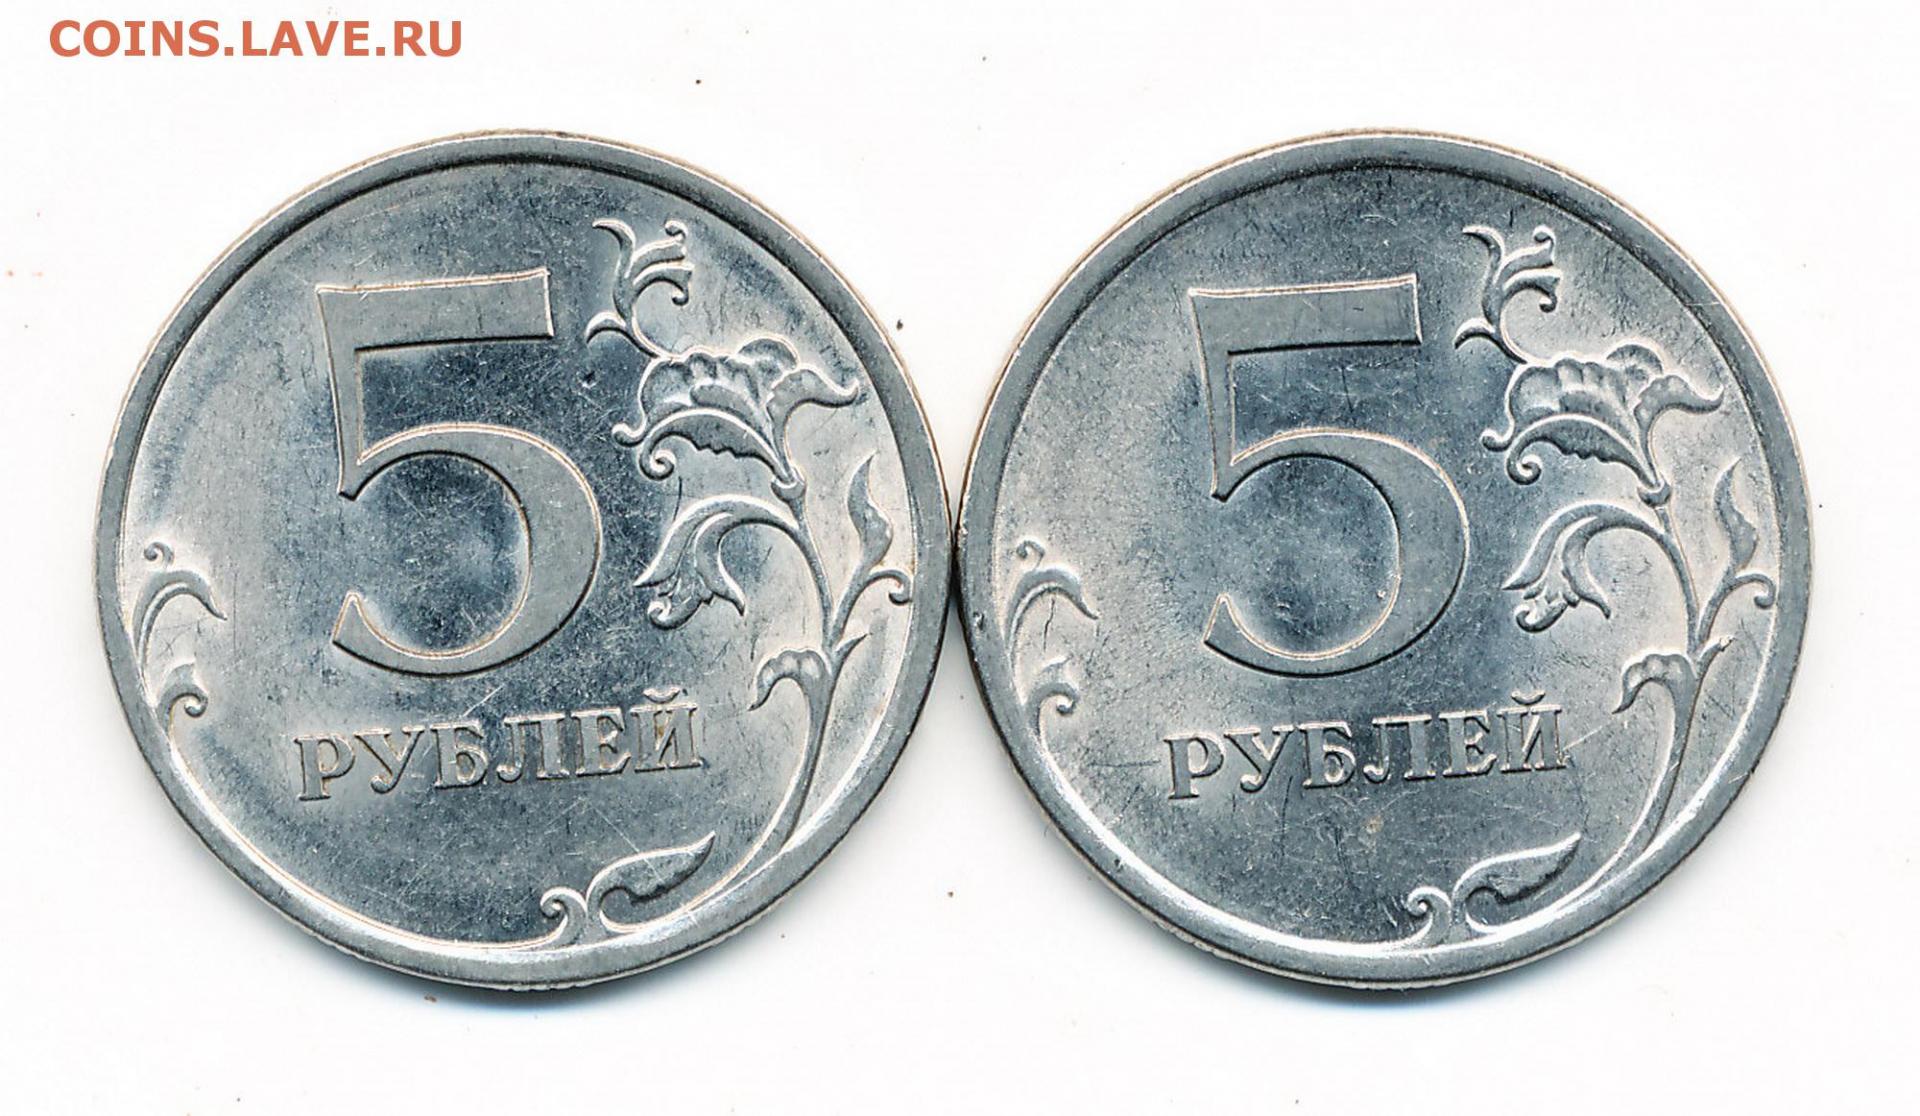 5 рублей 16 года. 5 Рублей 2009 СПМД. 5 Рублей 2009 СПМД Аверс г. 5 Рублей 2009 в другом металле. Фото 5 рублей 2009.